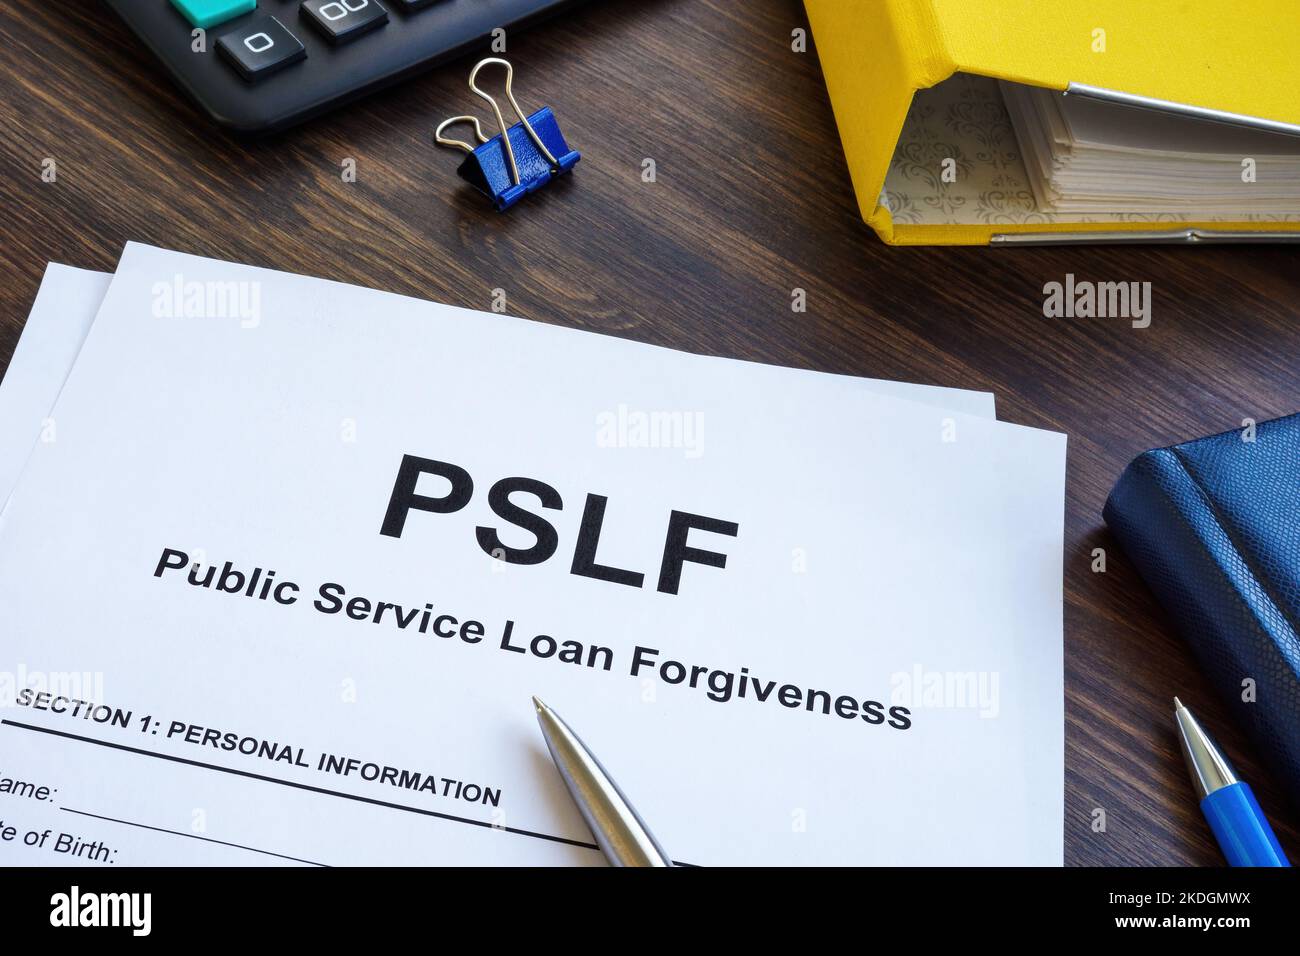 Papiere foe Public Service Loan Forgiveness PSLF auf der Holzoberfläche. Stockfoto